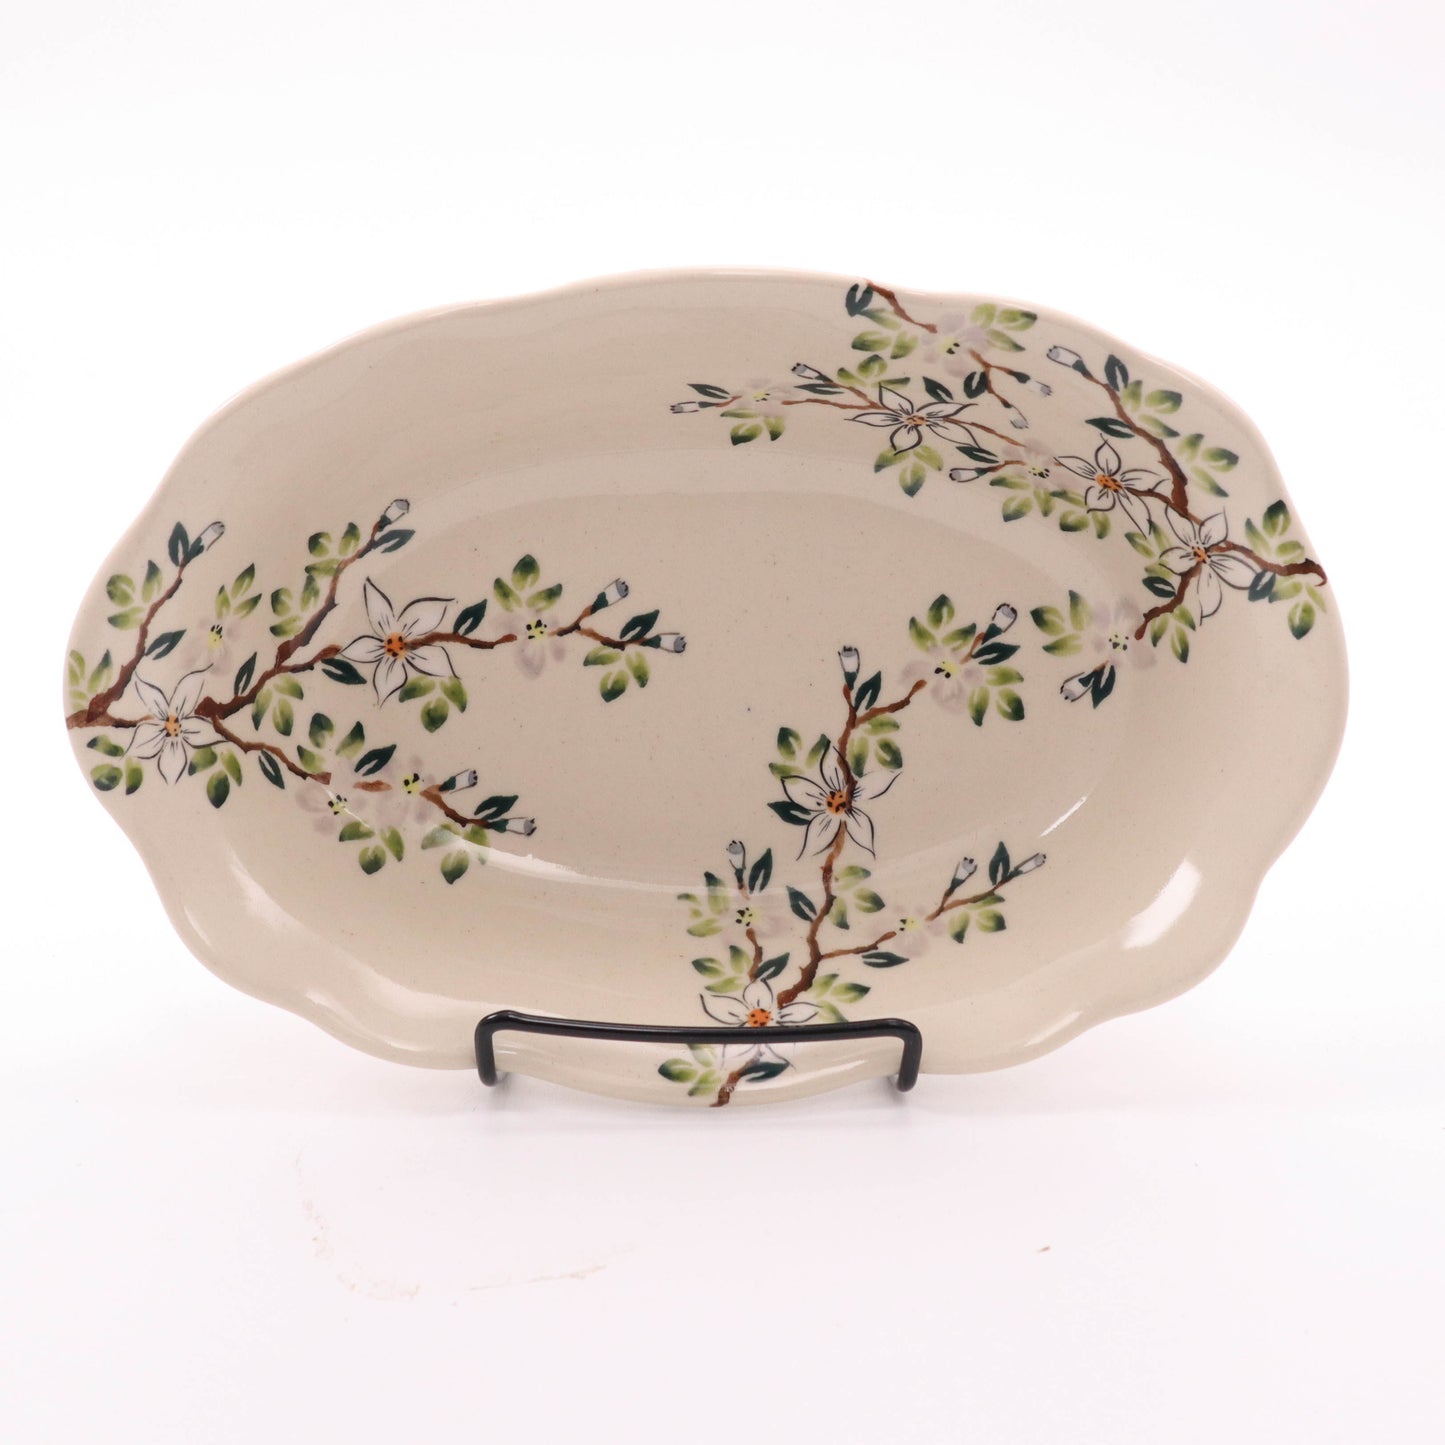 10"x7" Oval Waved Dish. Pattern: Apple Blossom